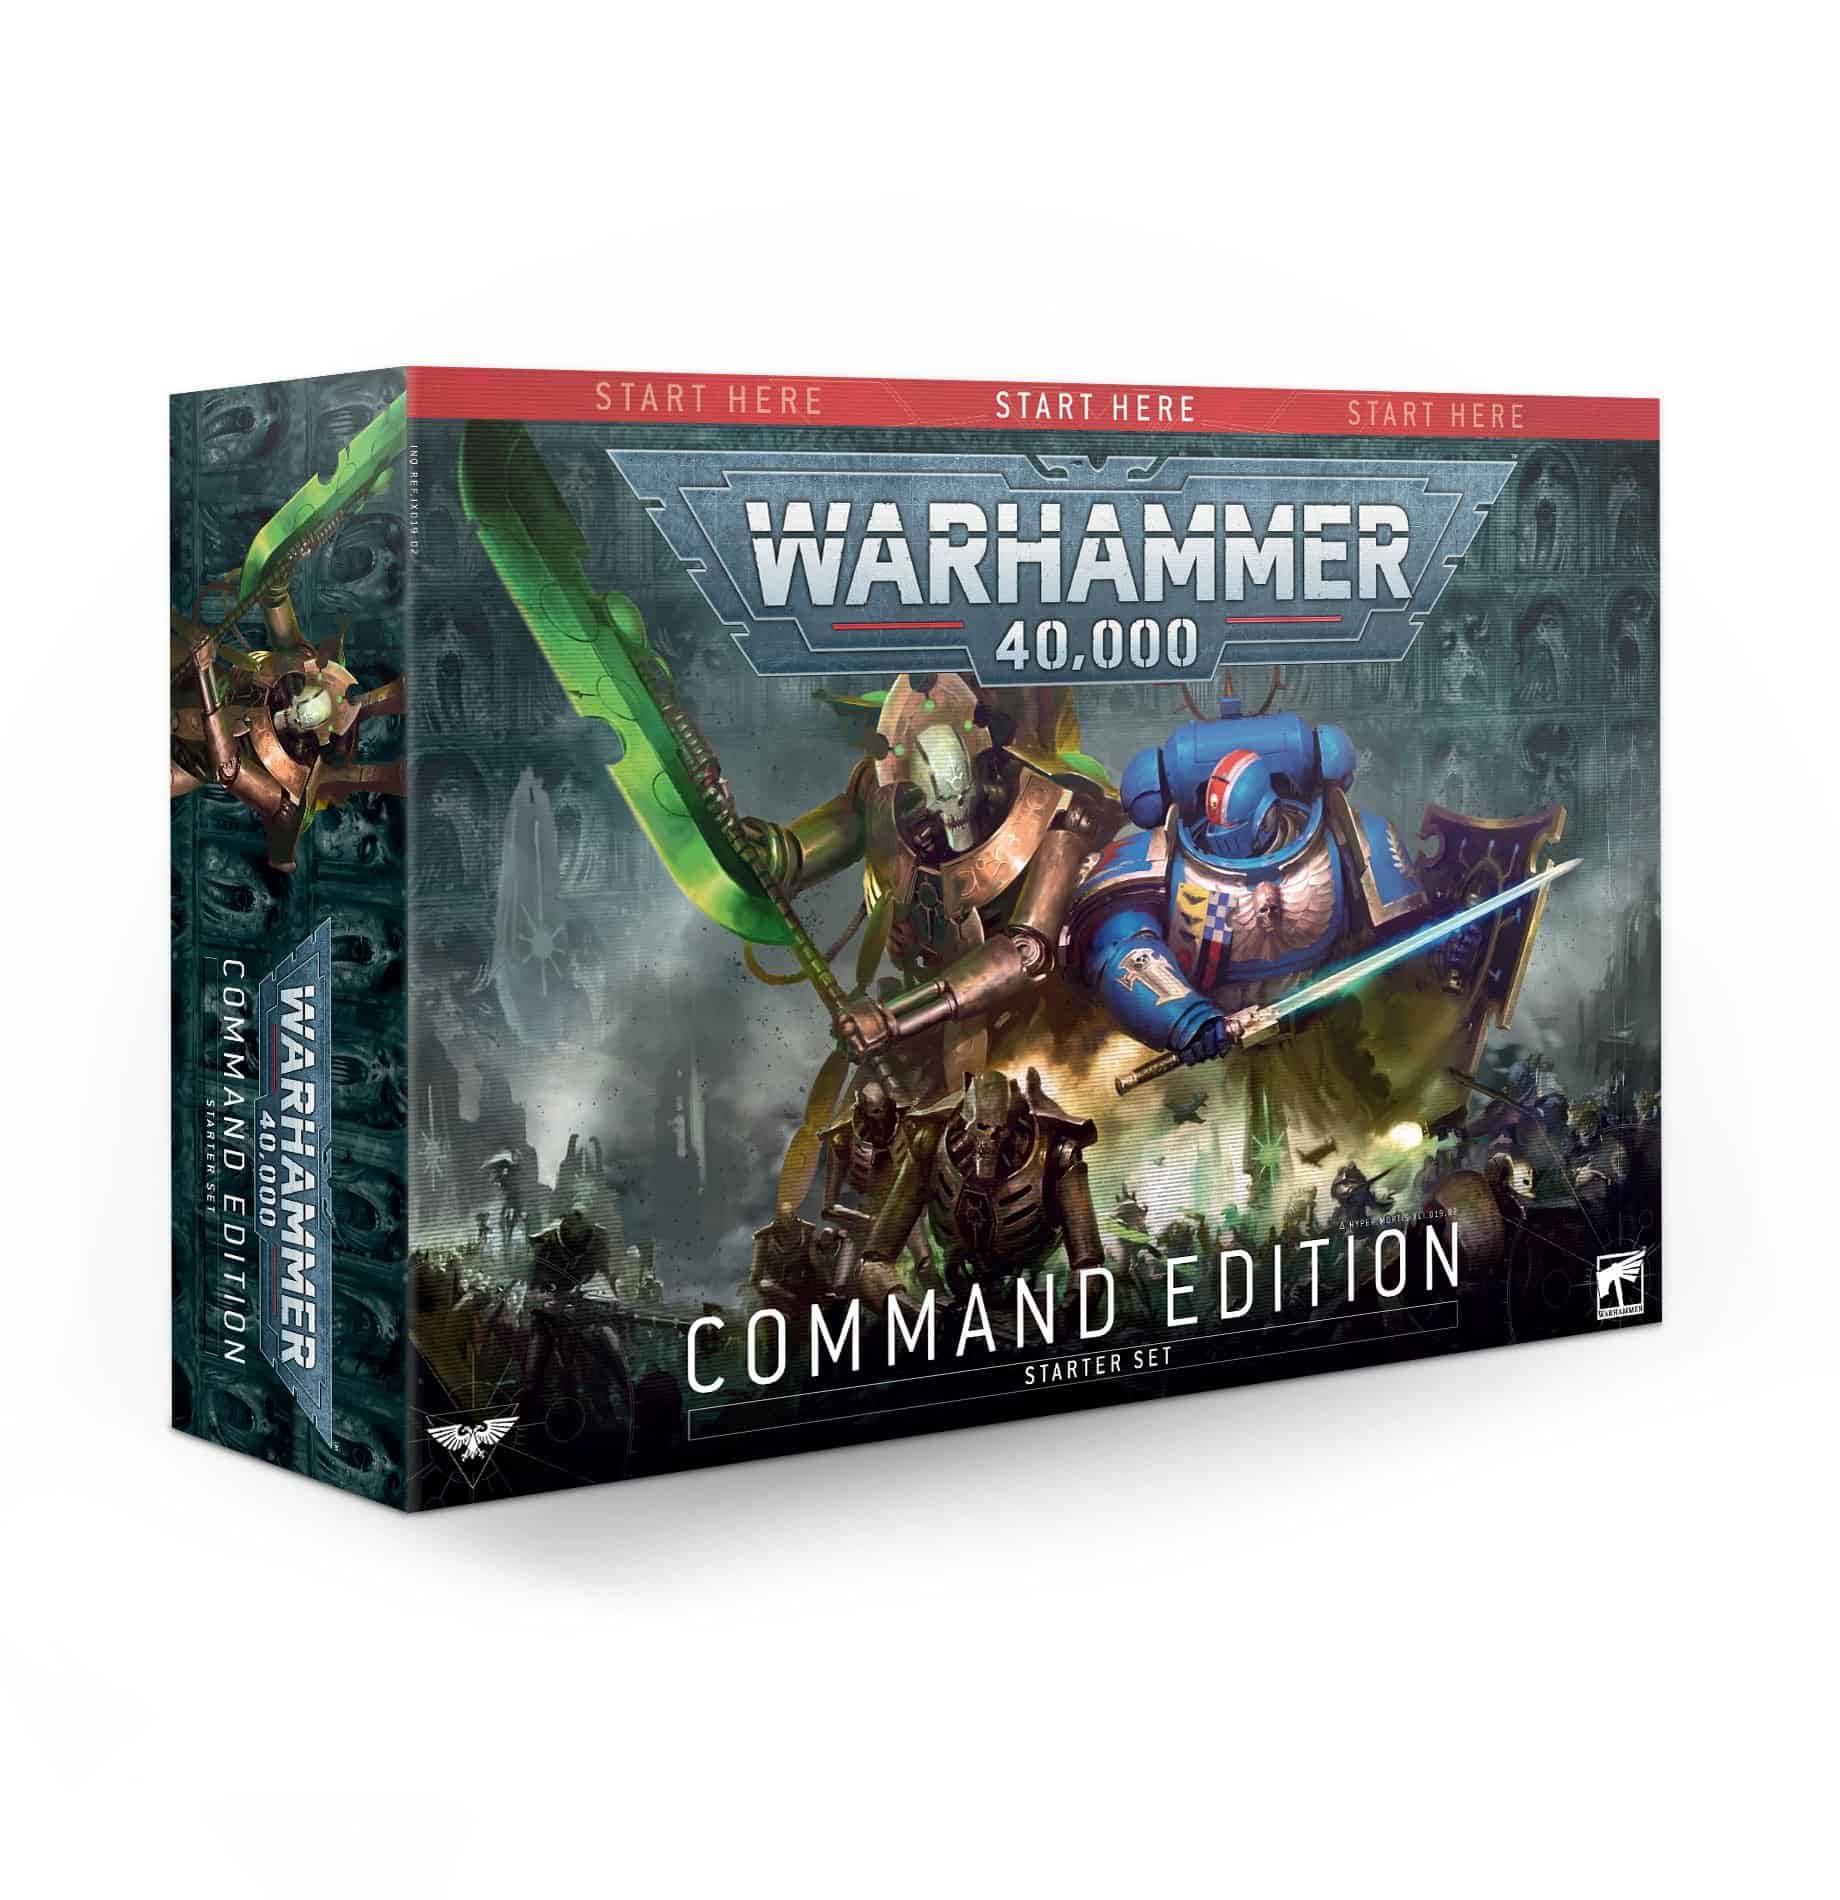 Warhammer 40K Command Edition